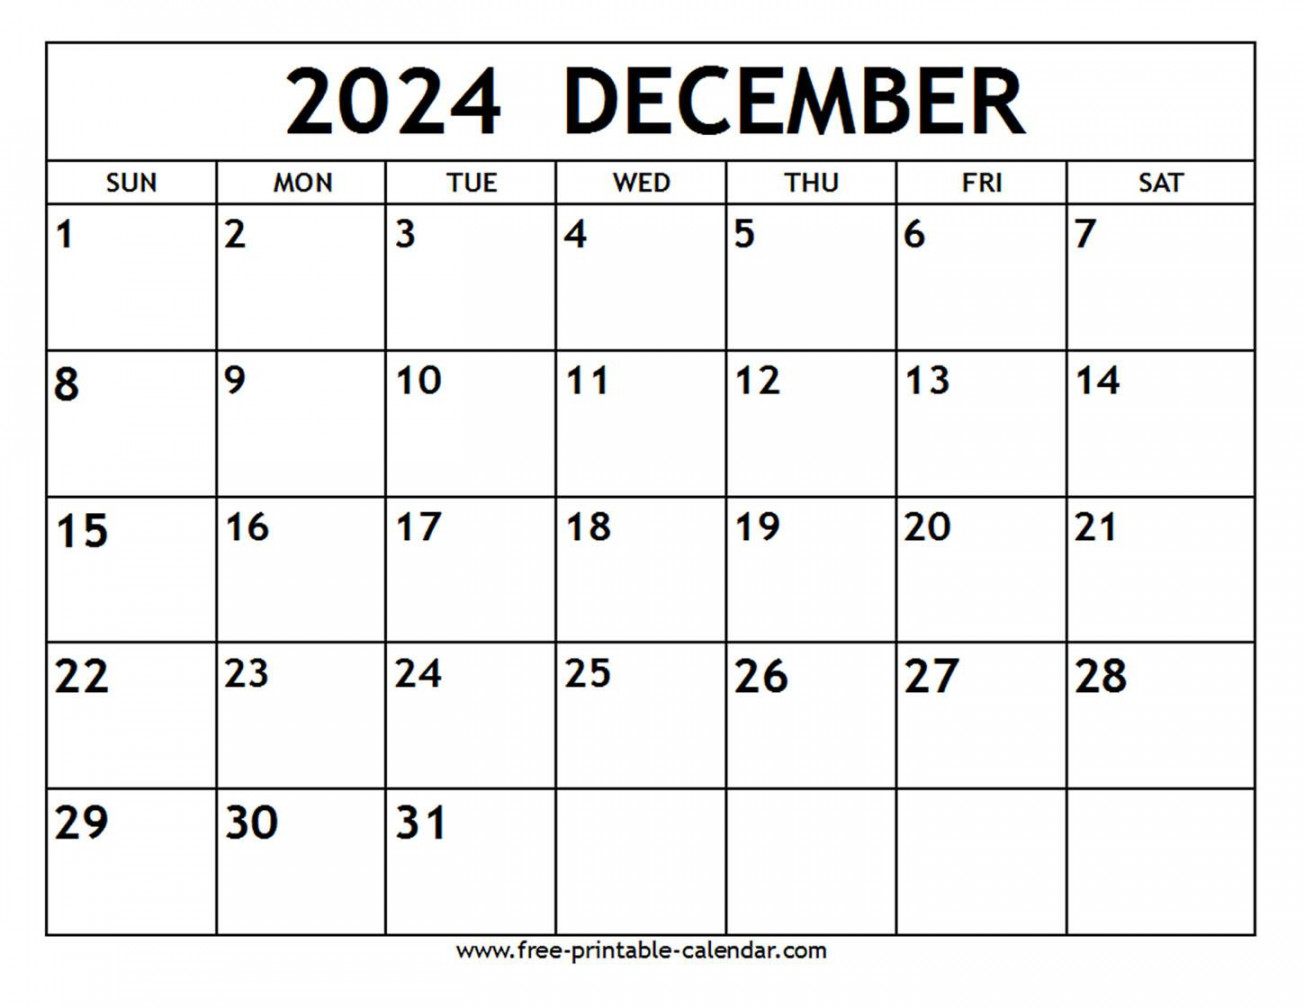 December  Calendar - Free-printable-calendar